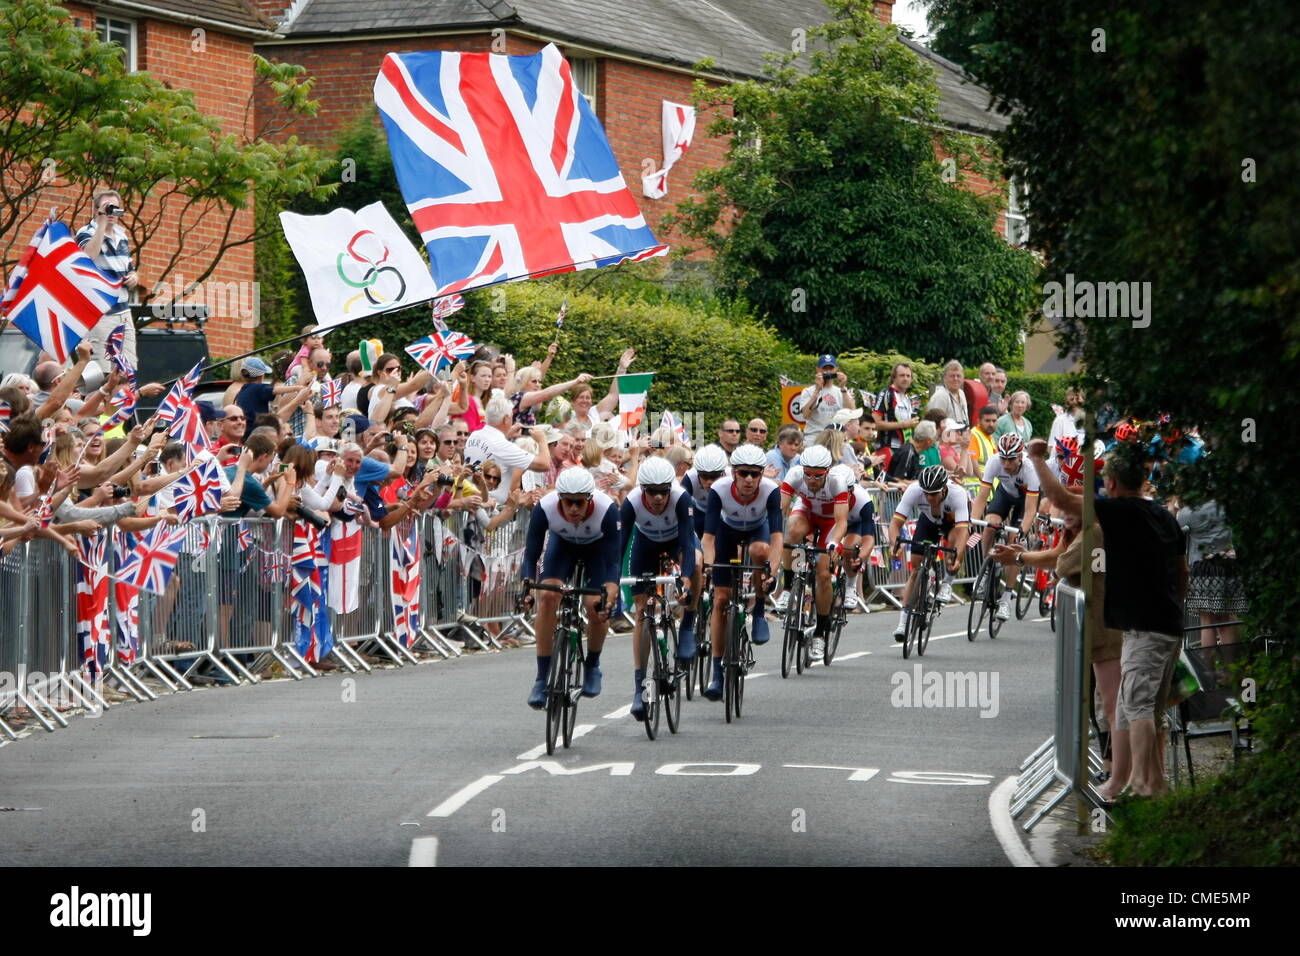 Olympic mens Cycling Road race at TOT HILL,SURREY, UK - July 28th 2012 Stock Photo